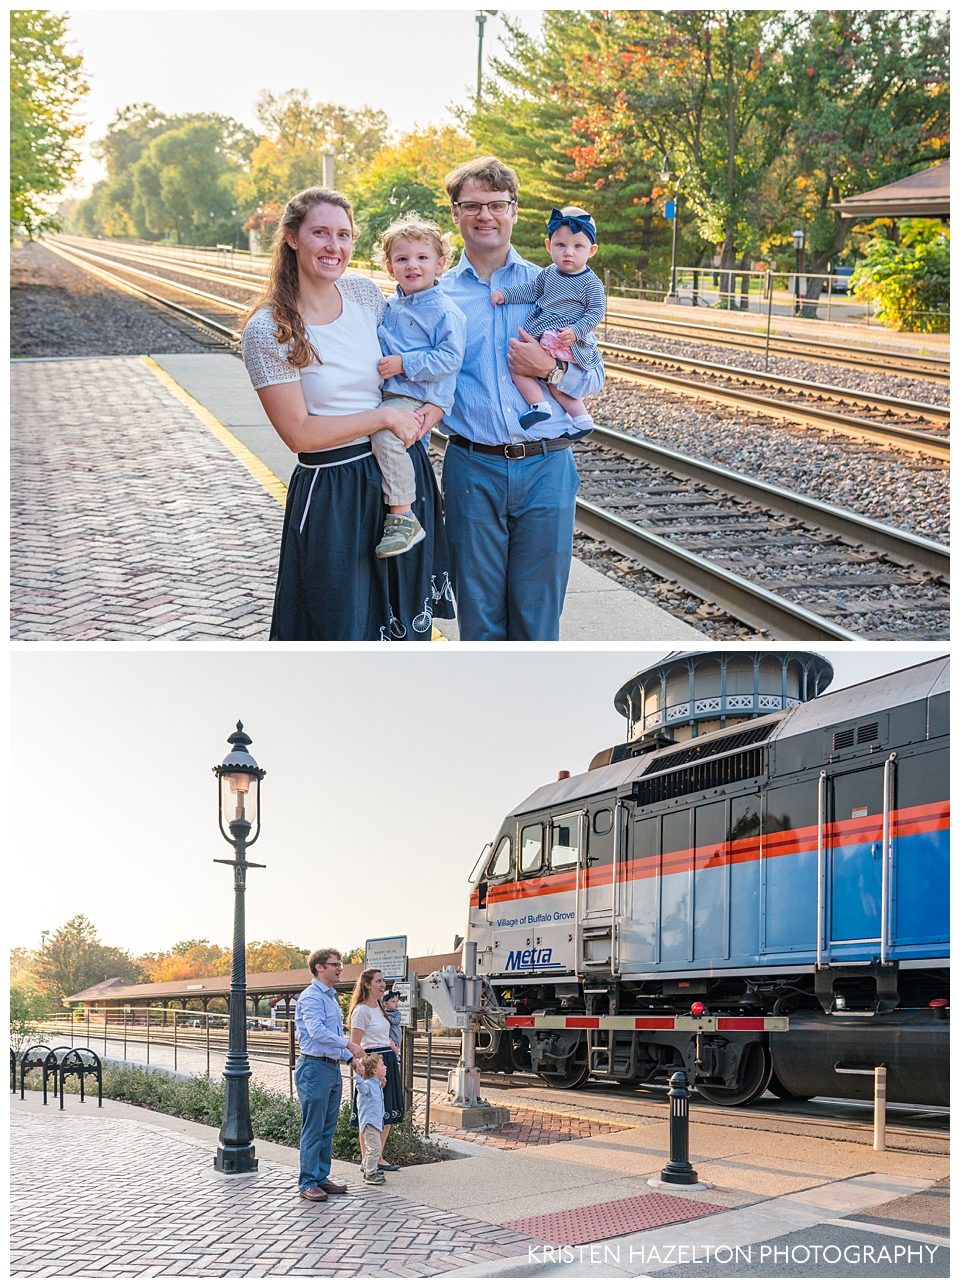 Train-watching family portraits by Oak Park, IL photographer Kristen Hazelton